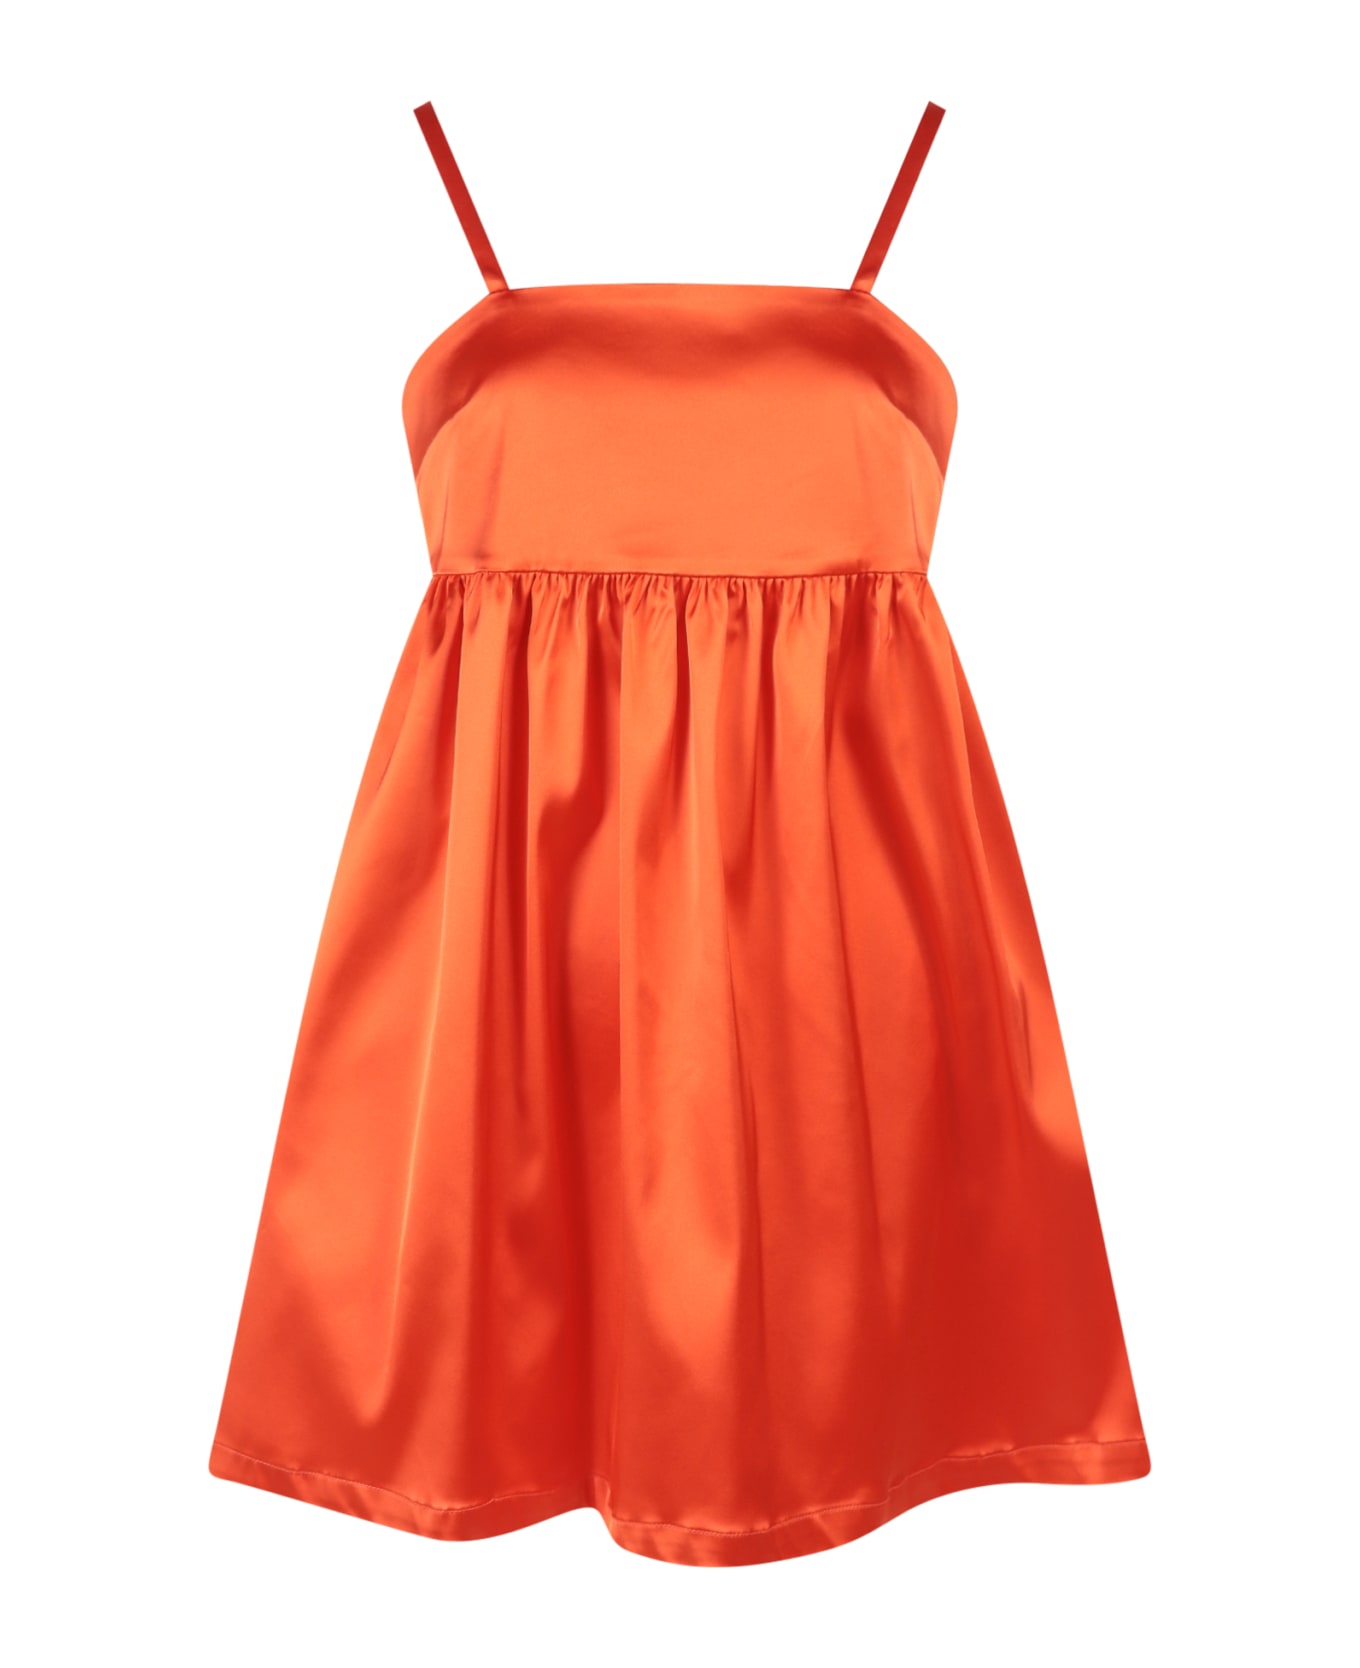 SEMICOUTURE Dress - Orange